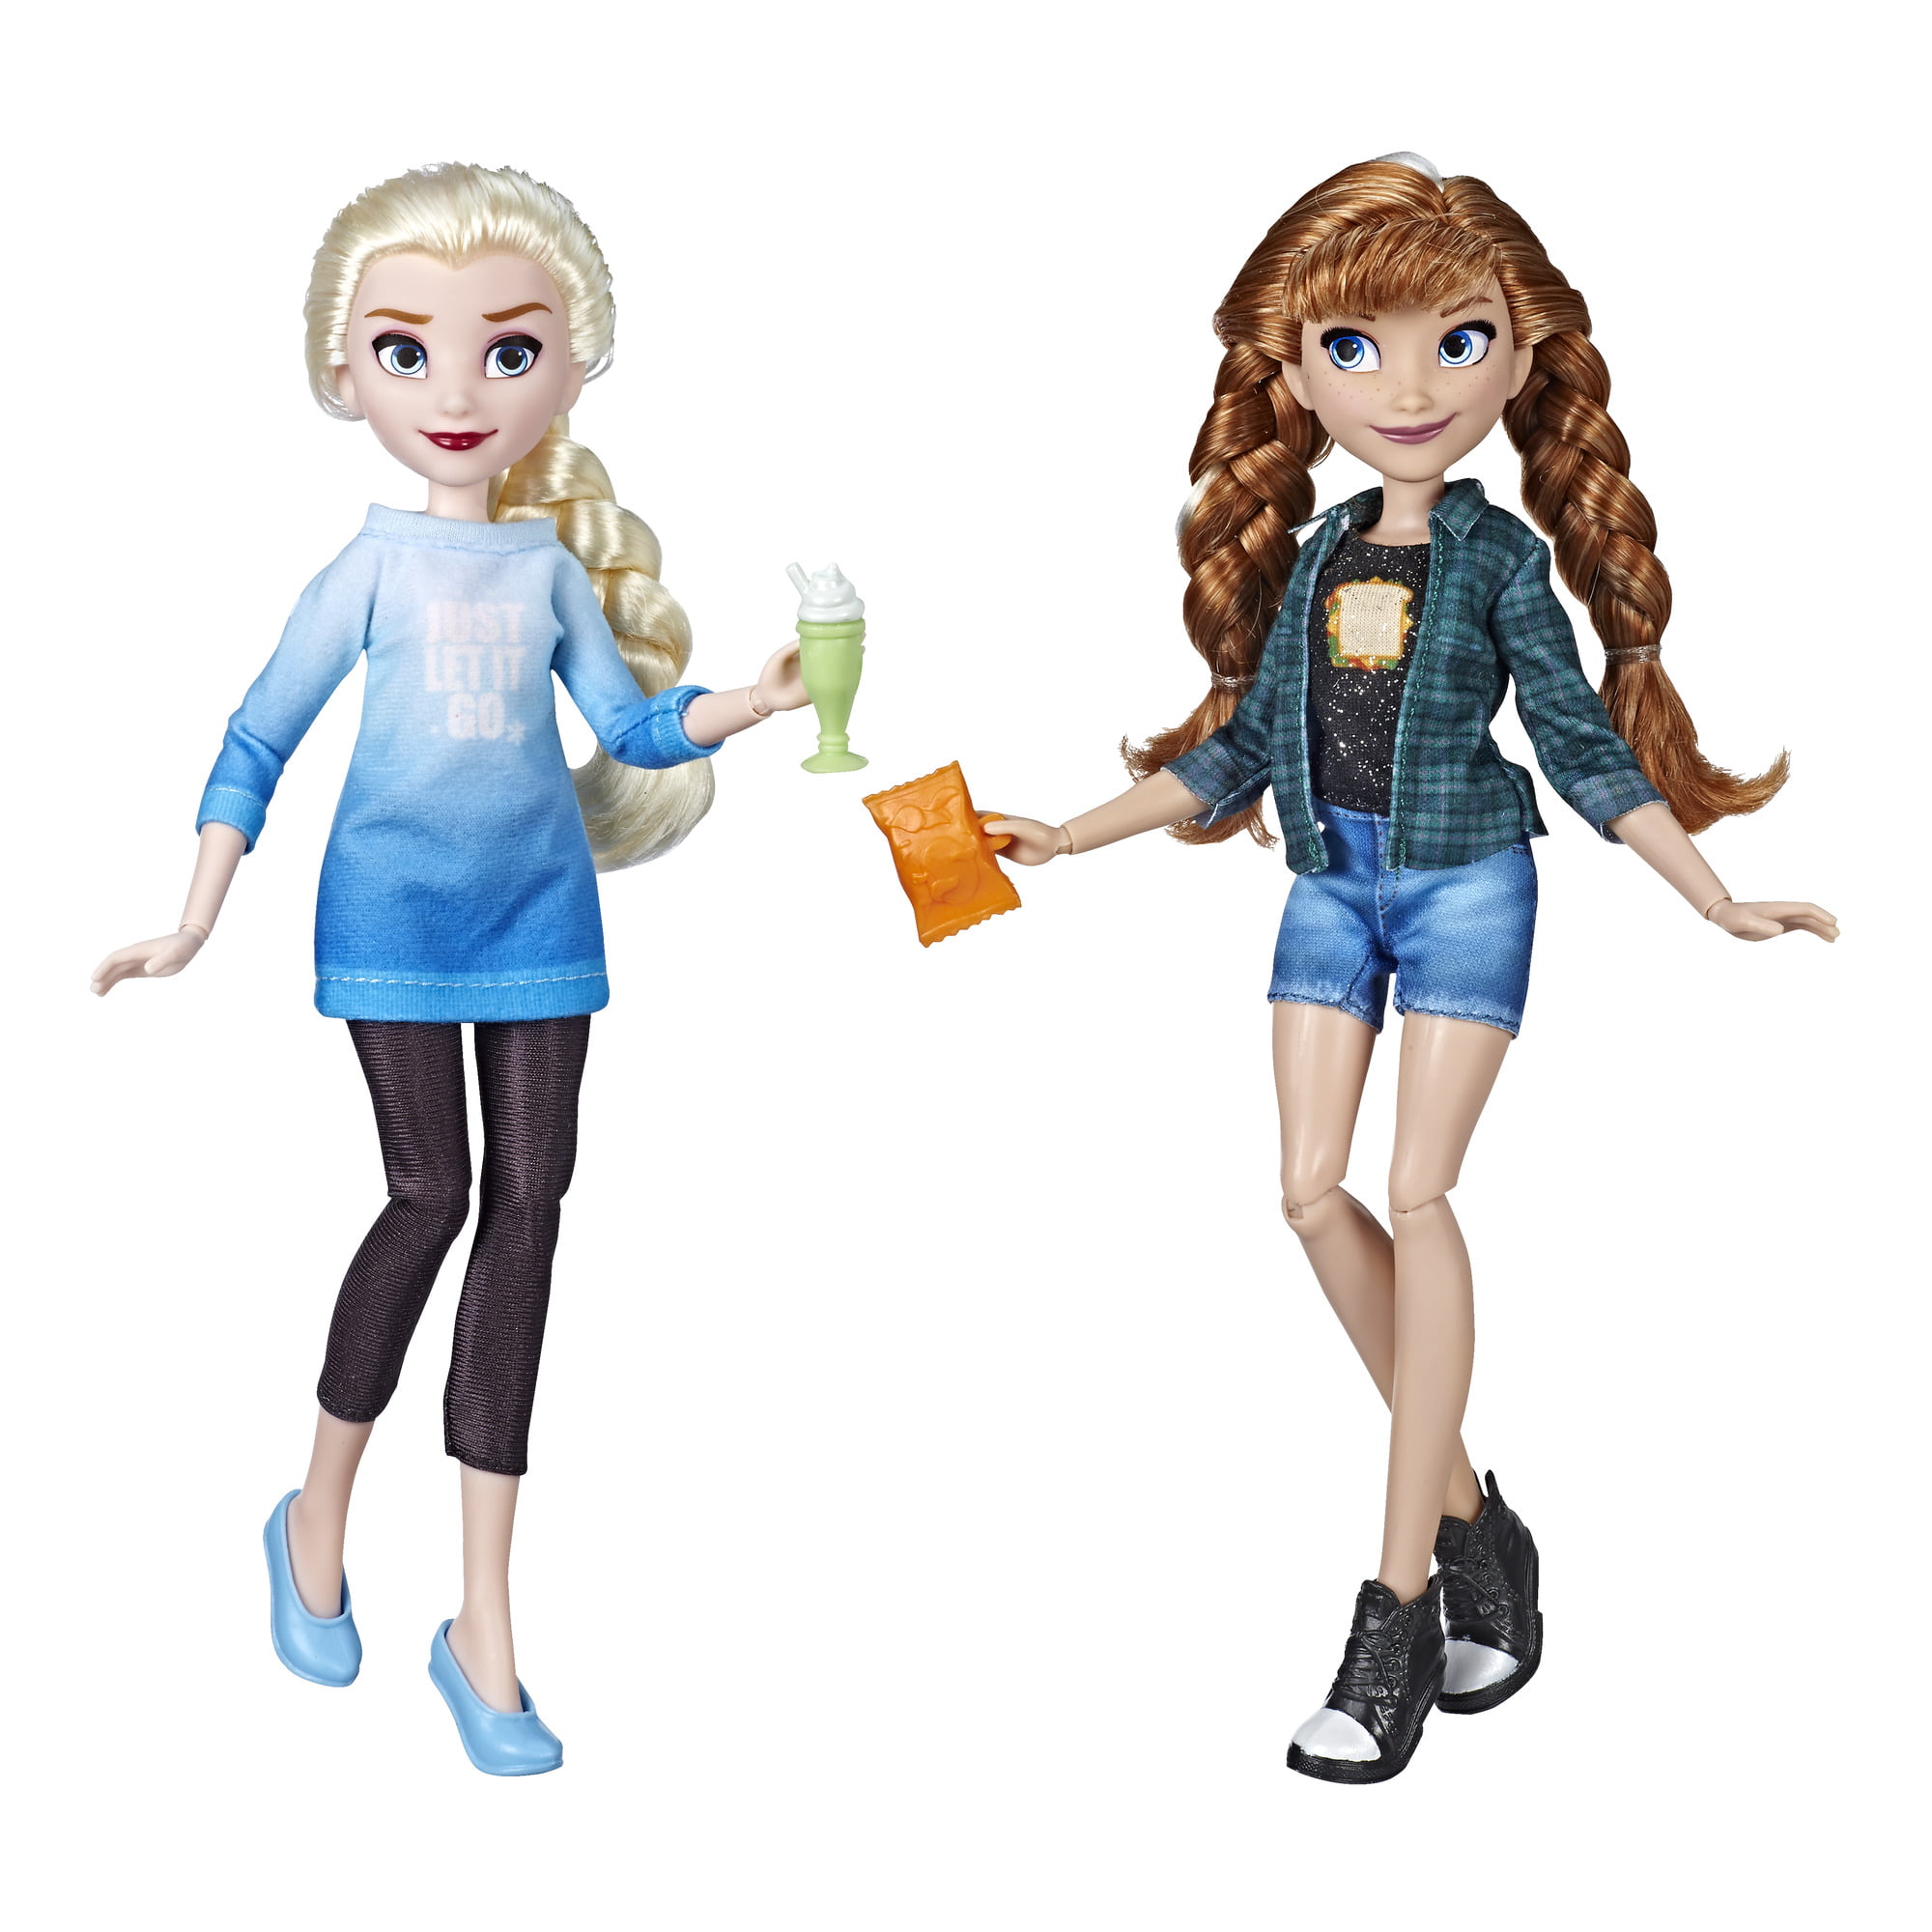 Disney Princess Ralph Breaks the Internet Movie Dolls, Elsa and Anna -  